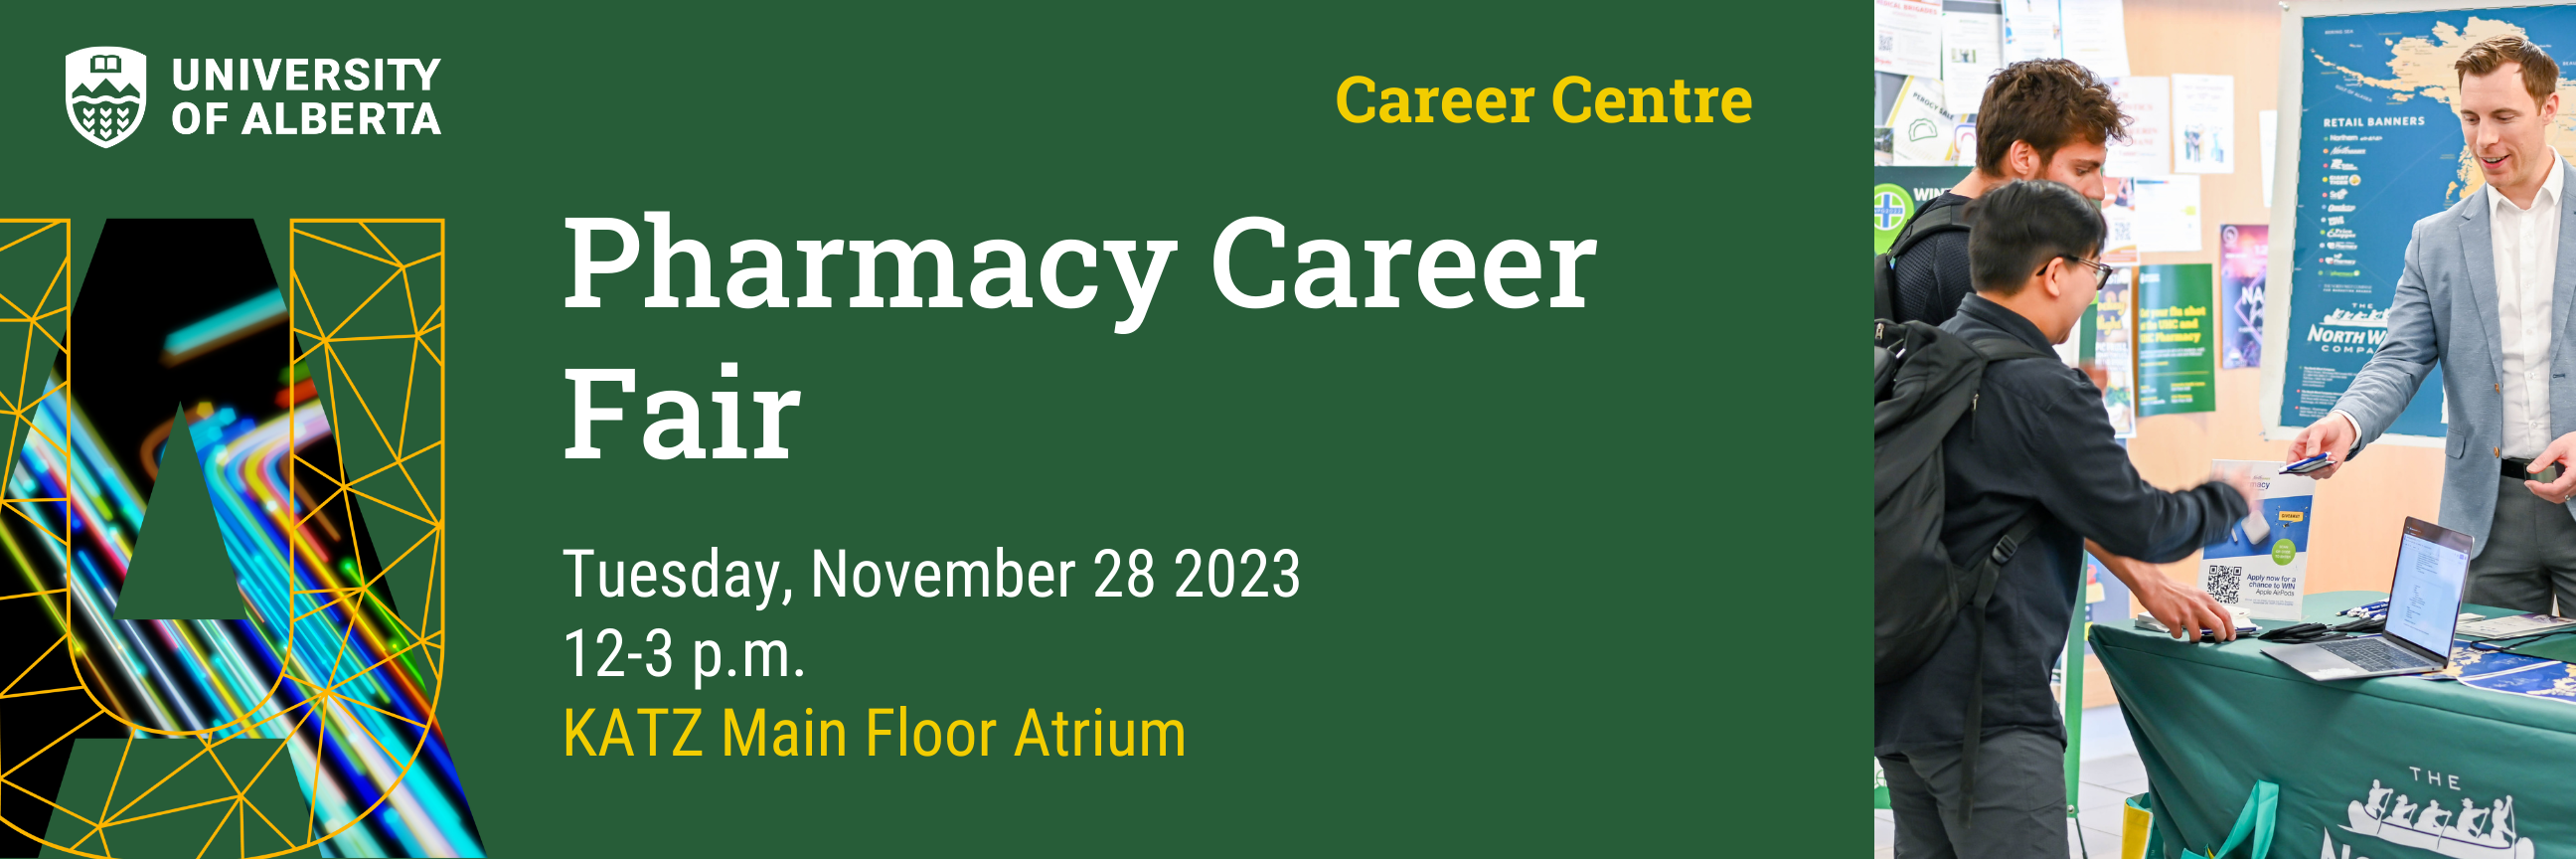 Pharmacy Career Fair - Tuesday, November 28 2023, 12 - 3 p.m. KATZ Main Floor Atrium